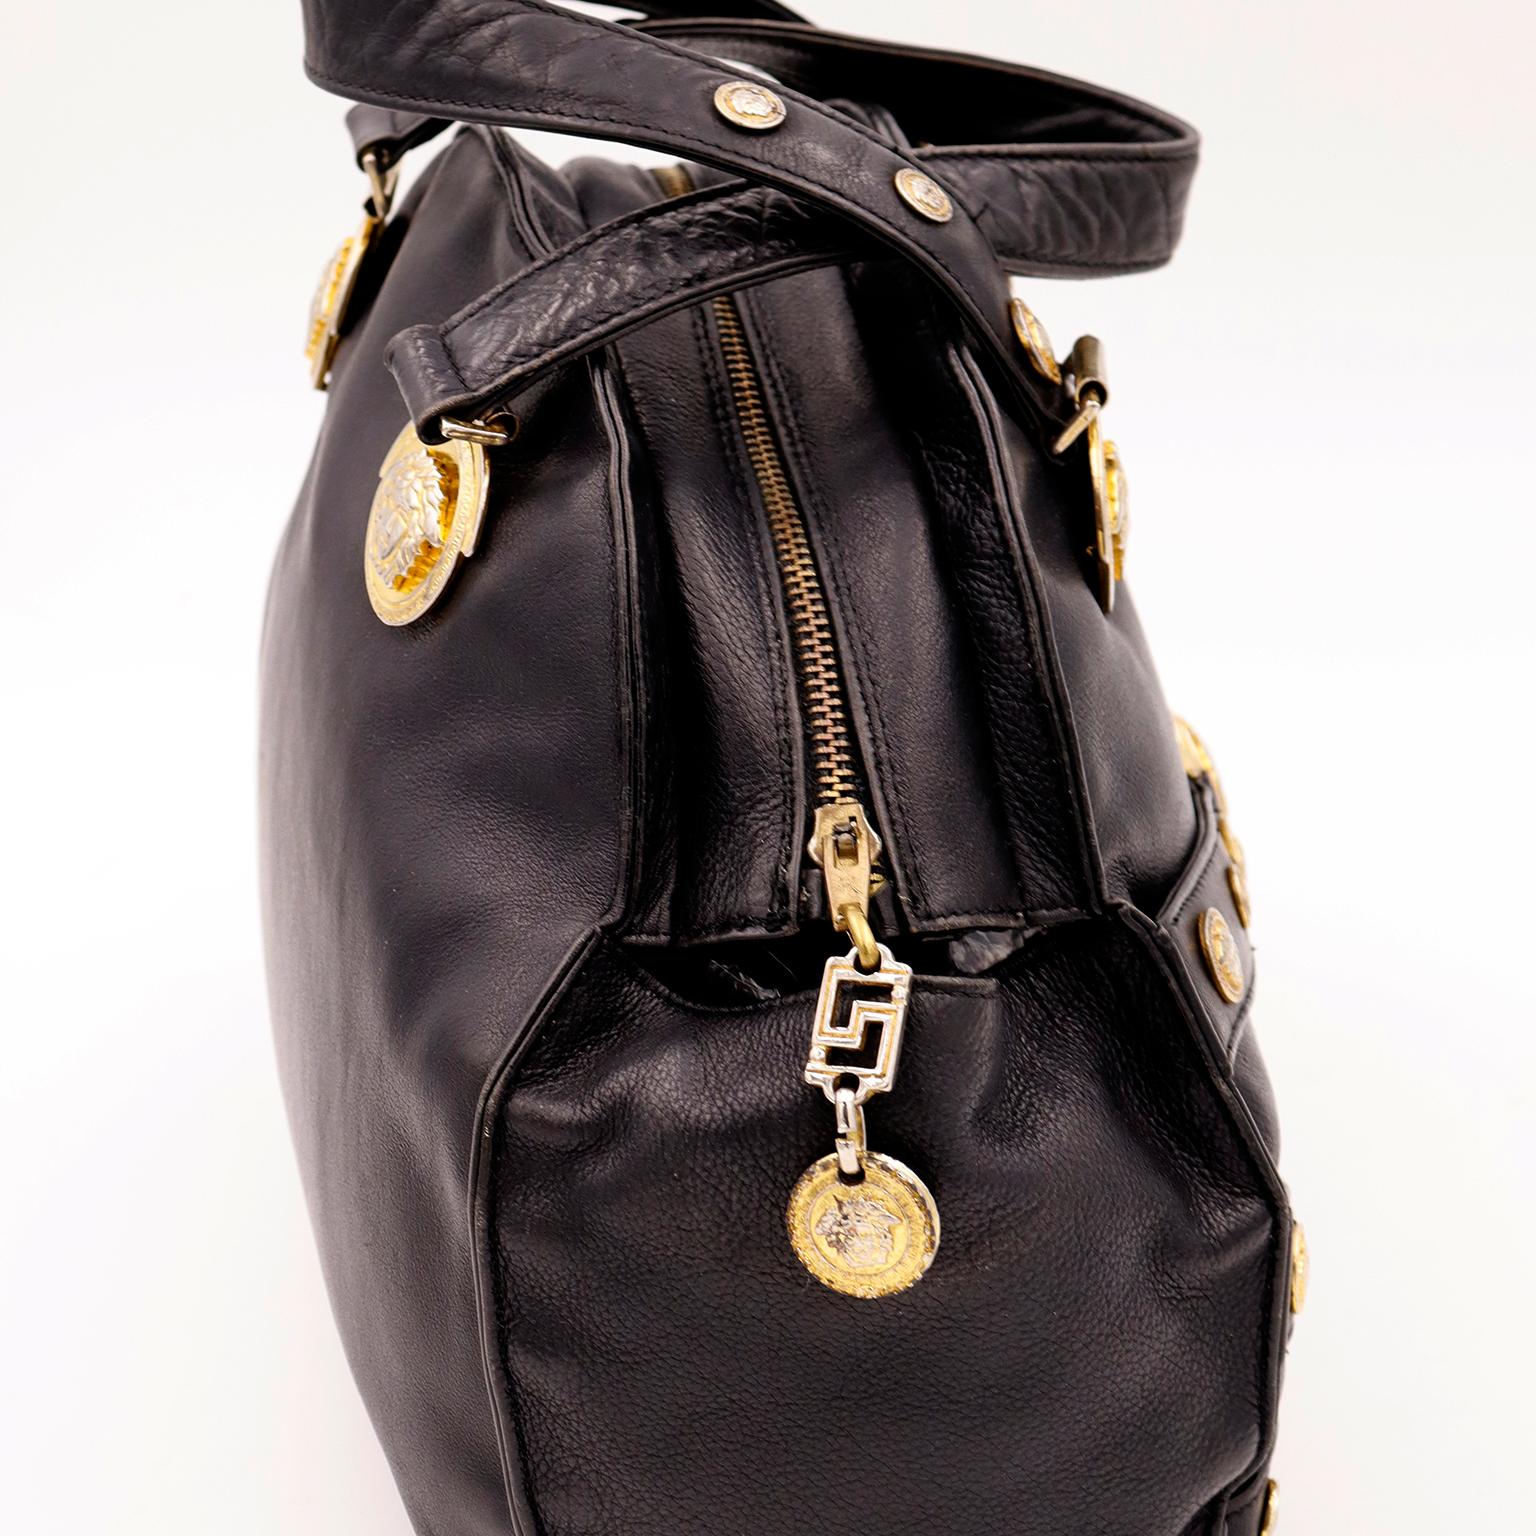 Gianni Versace 1992 Medusa Bondage Black Leather Top Handle Satchel Handbag 9